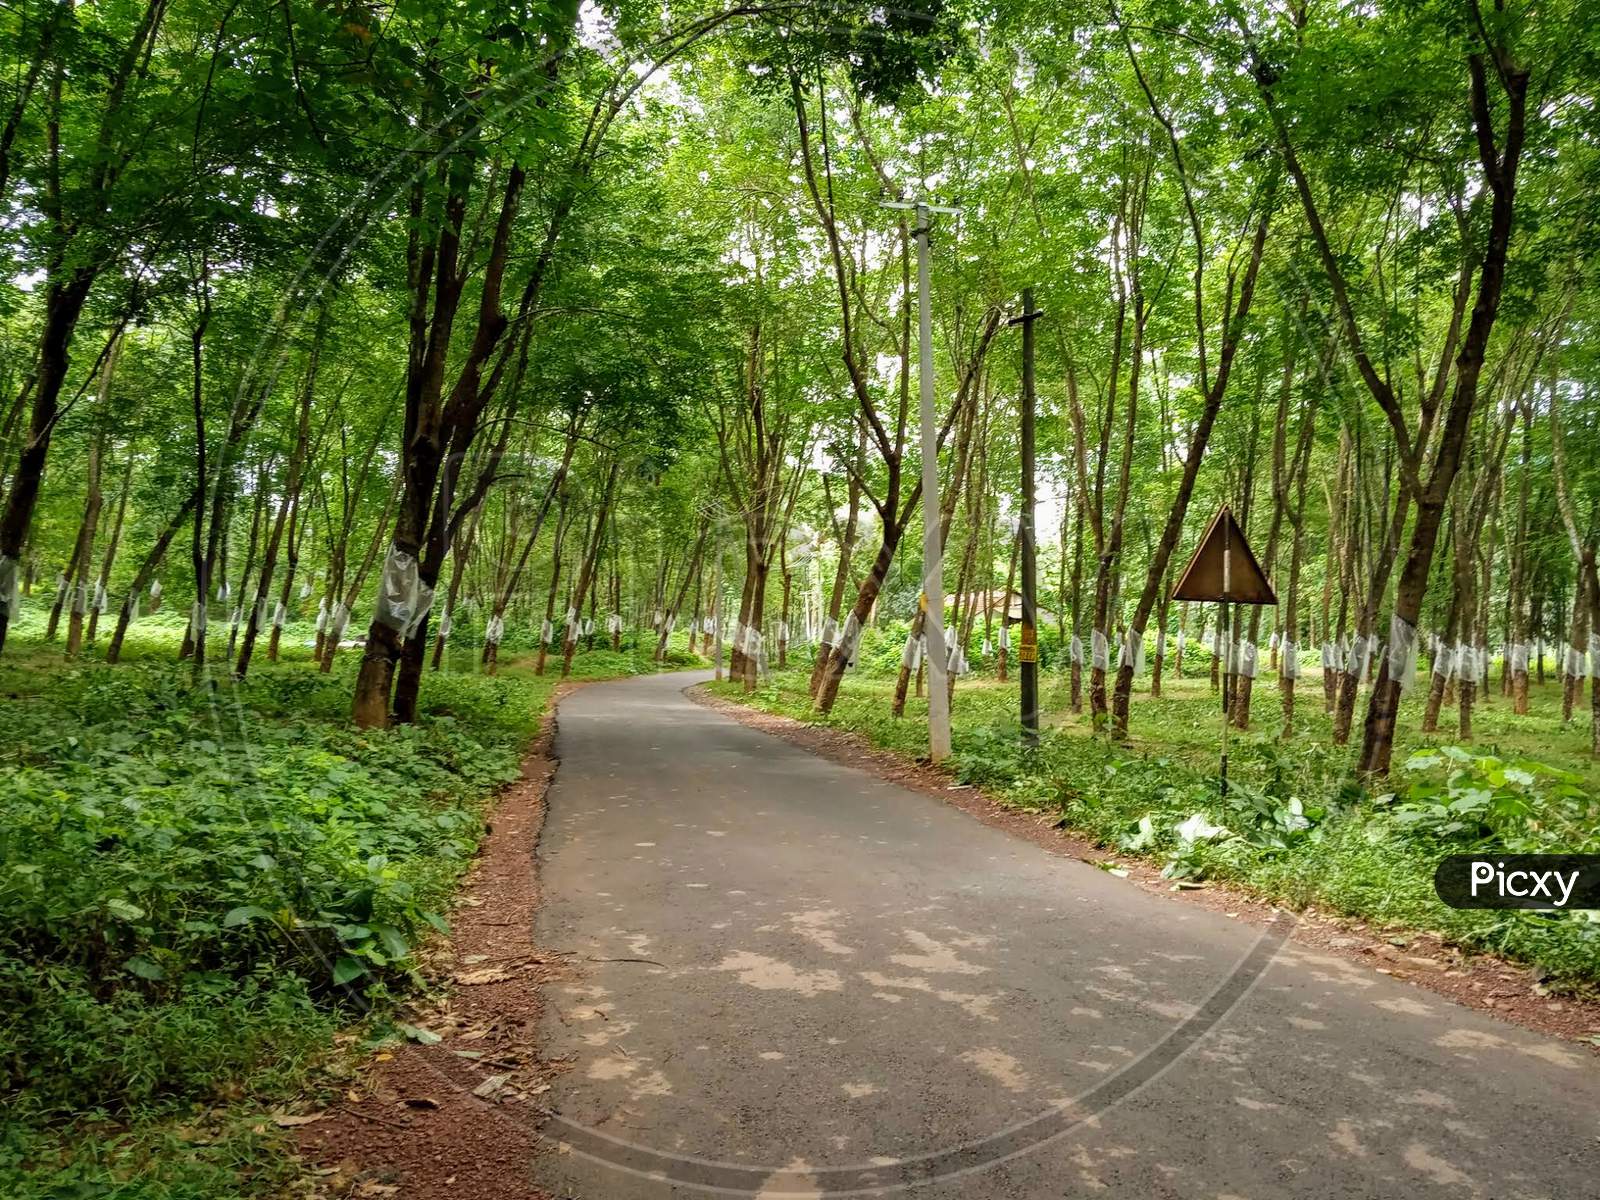 Road through rubber estate in Kerala